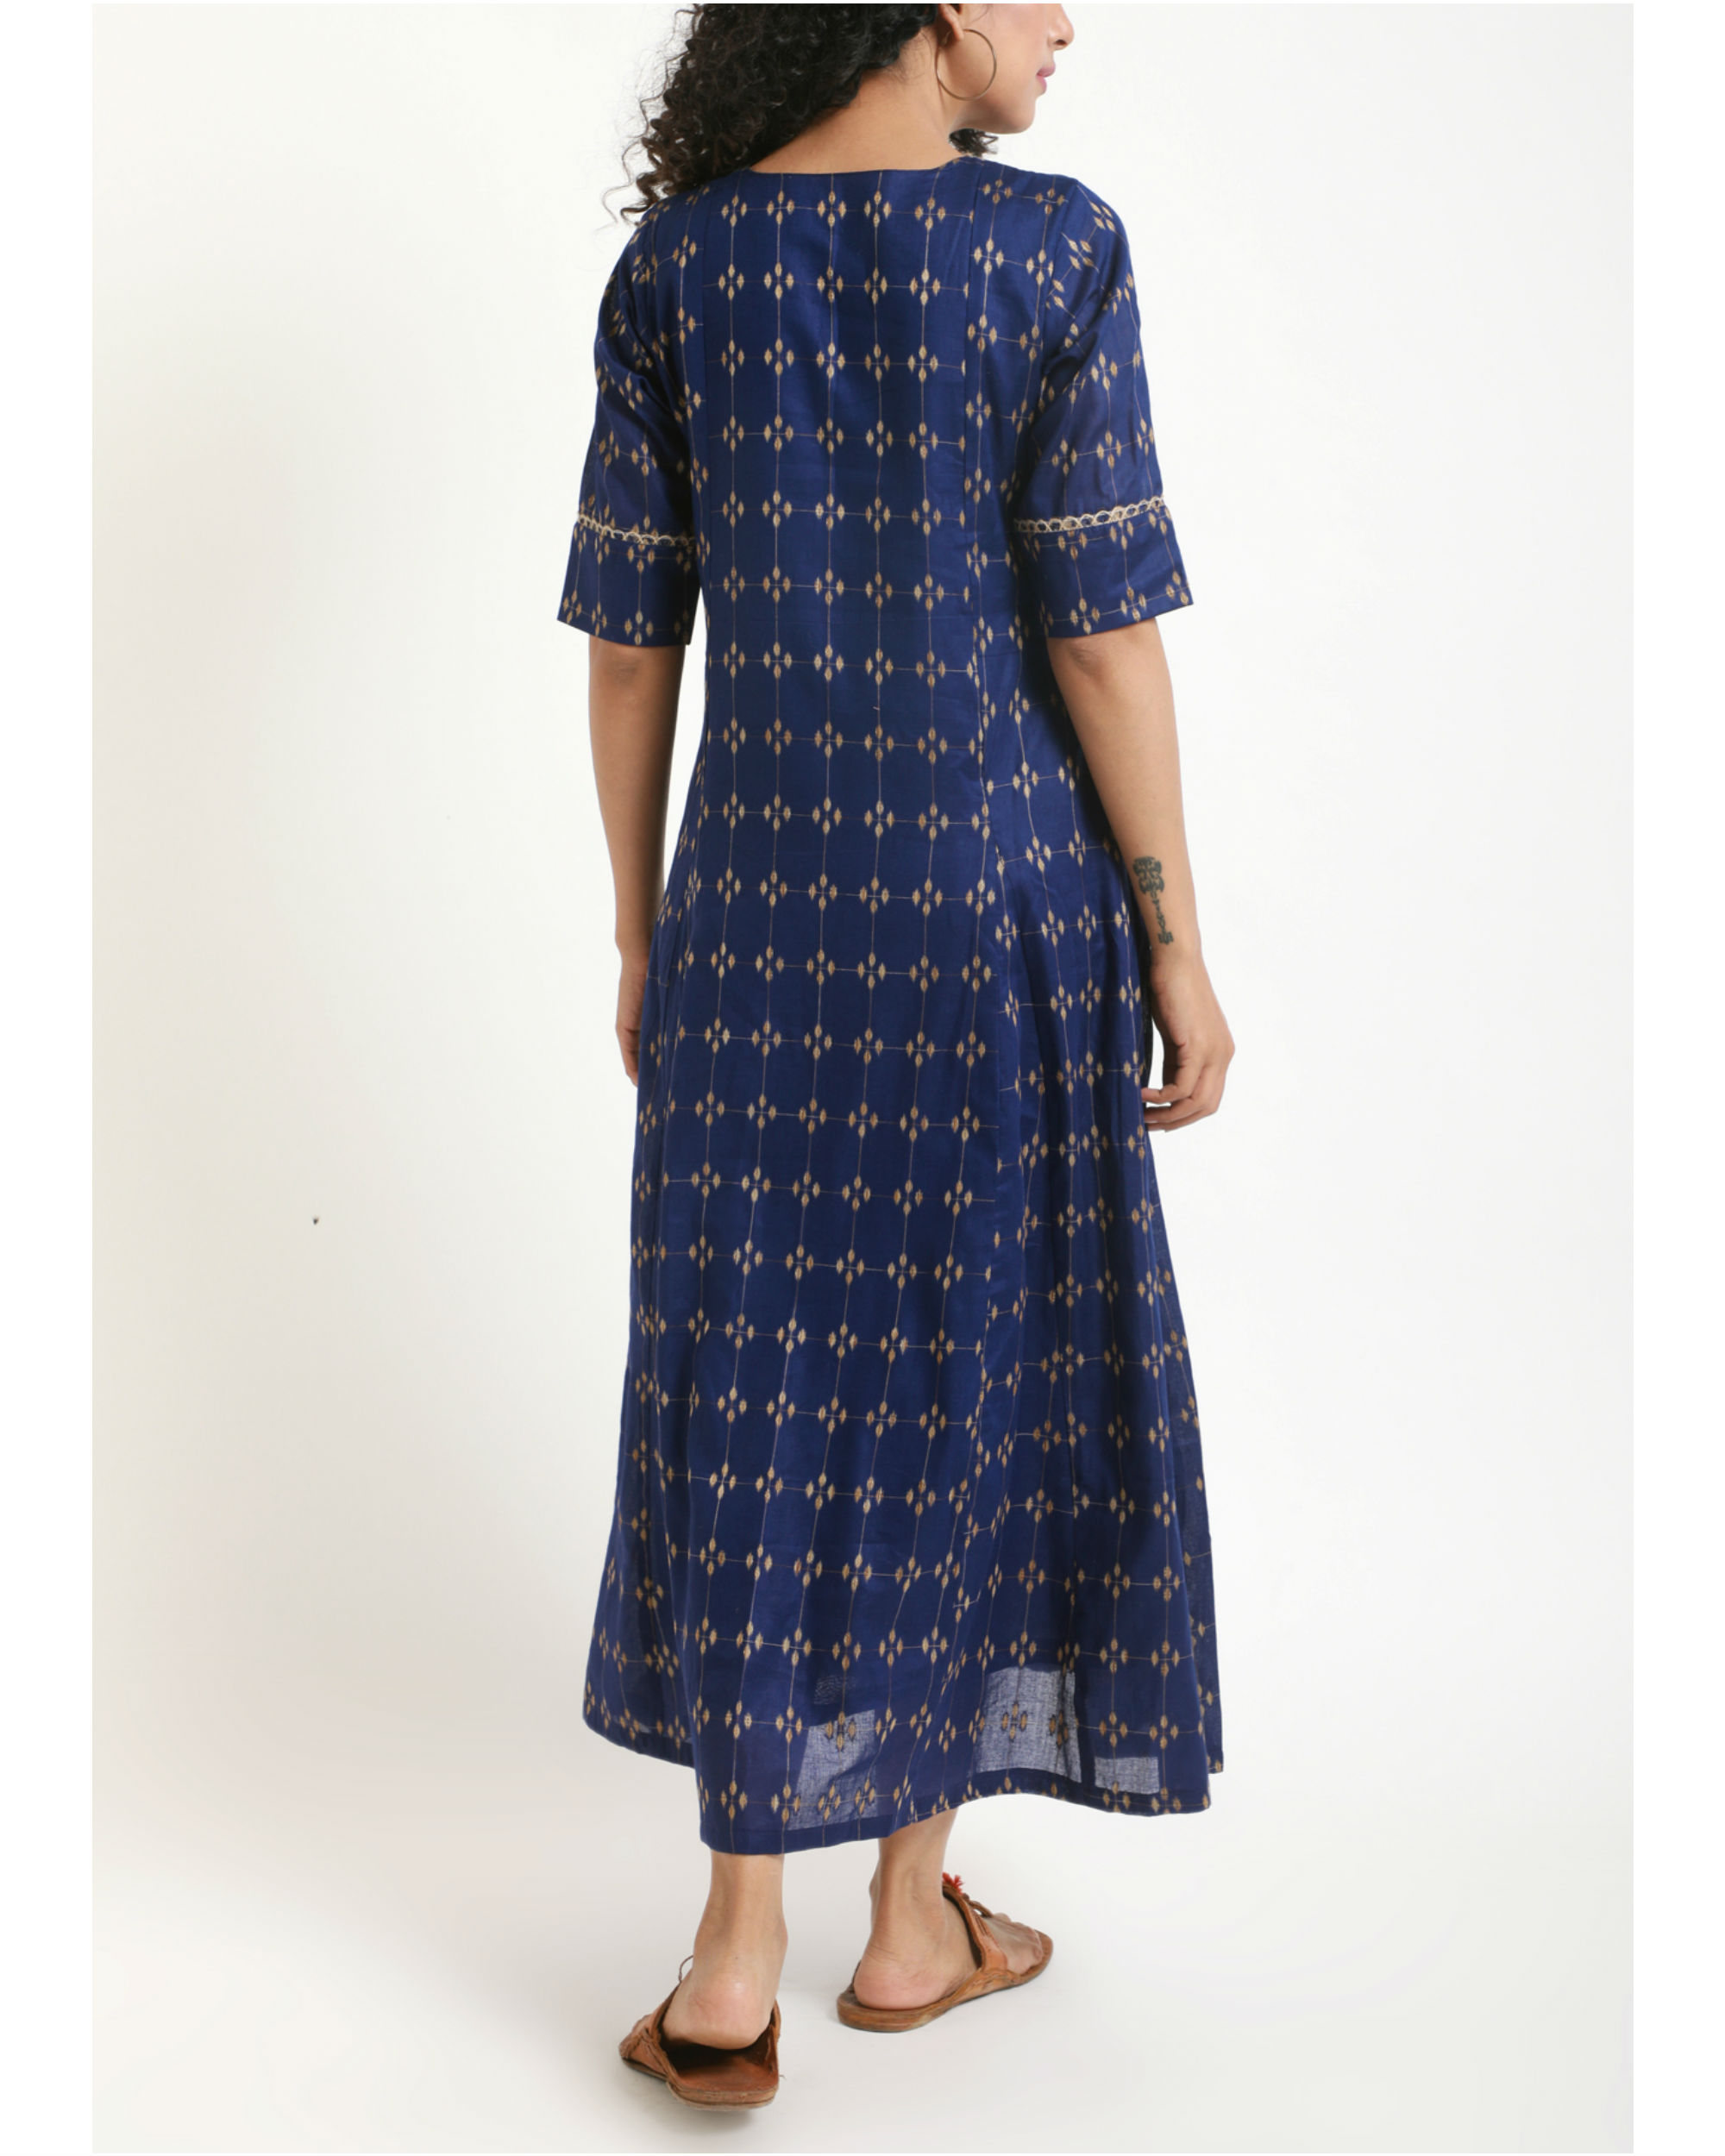 Blue Cotton Jute Dress by trueBrowns | The Secret Label